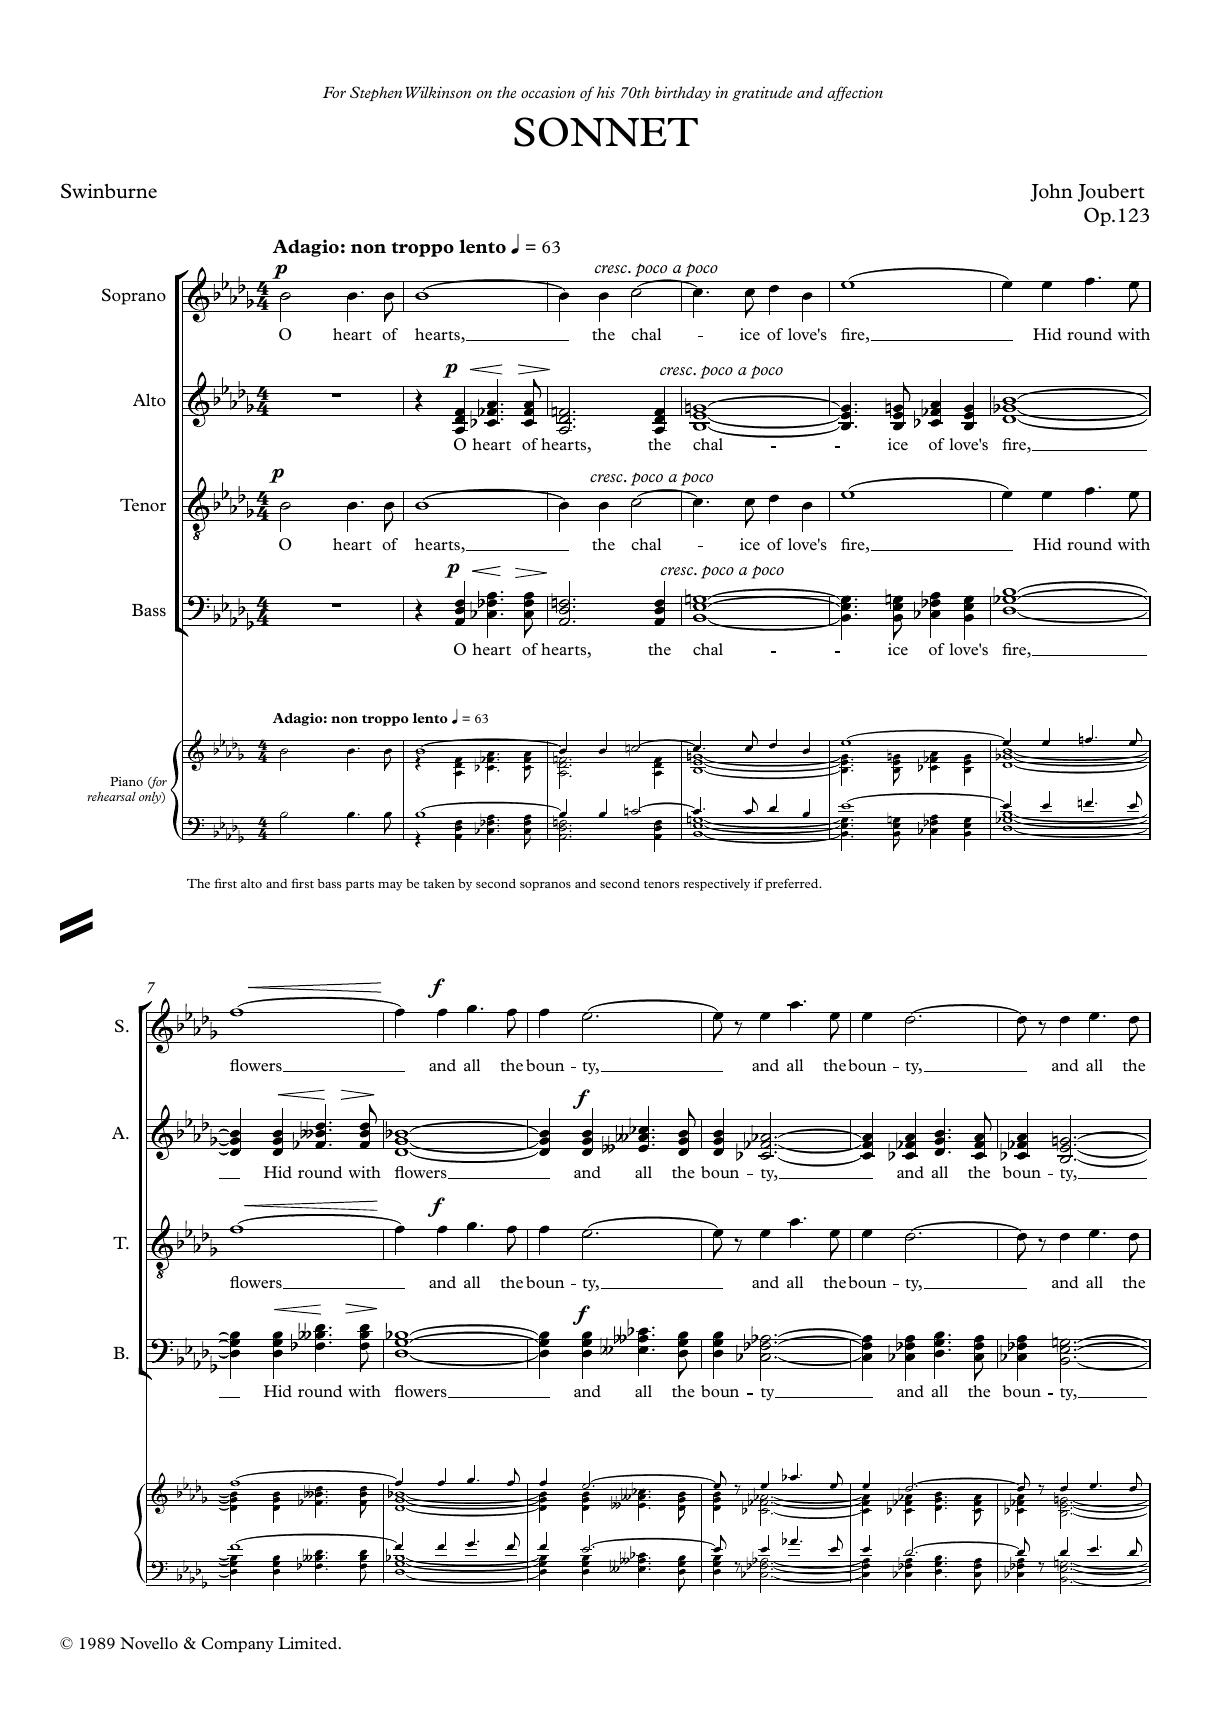 John Joubert Sonnet Sheet Music Notes & Chords for Choir - Download or Print PDF